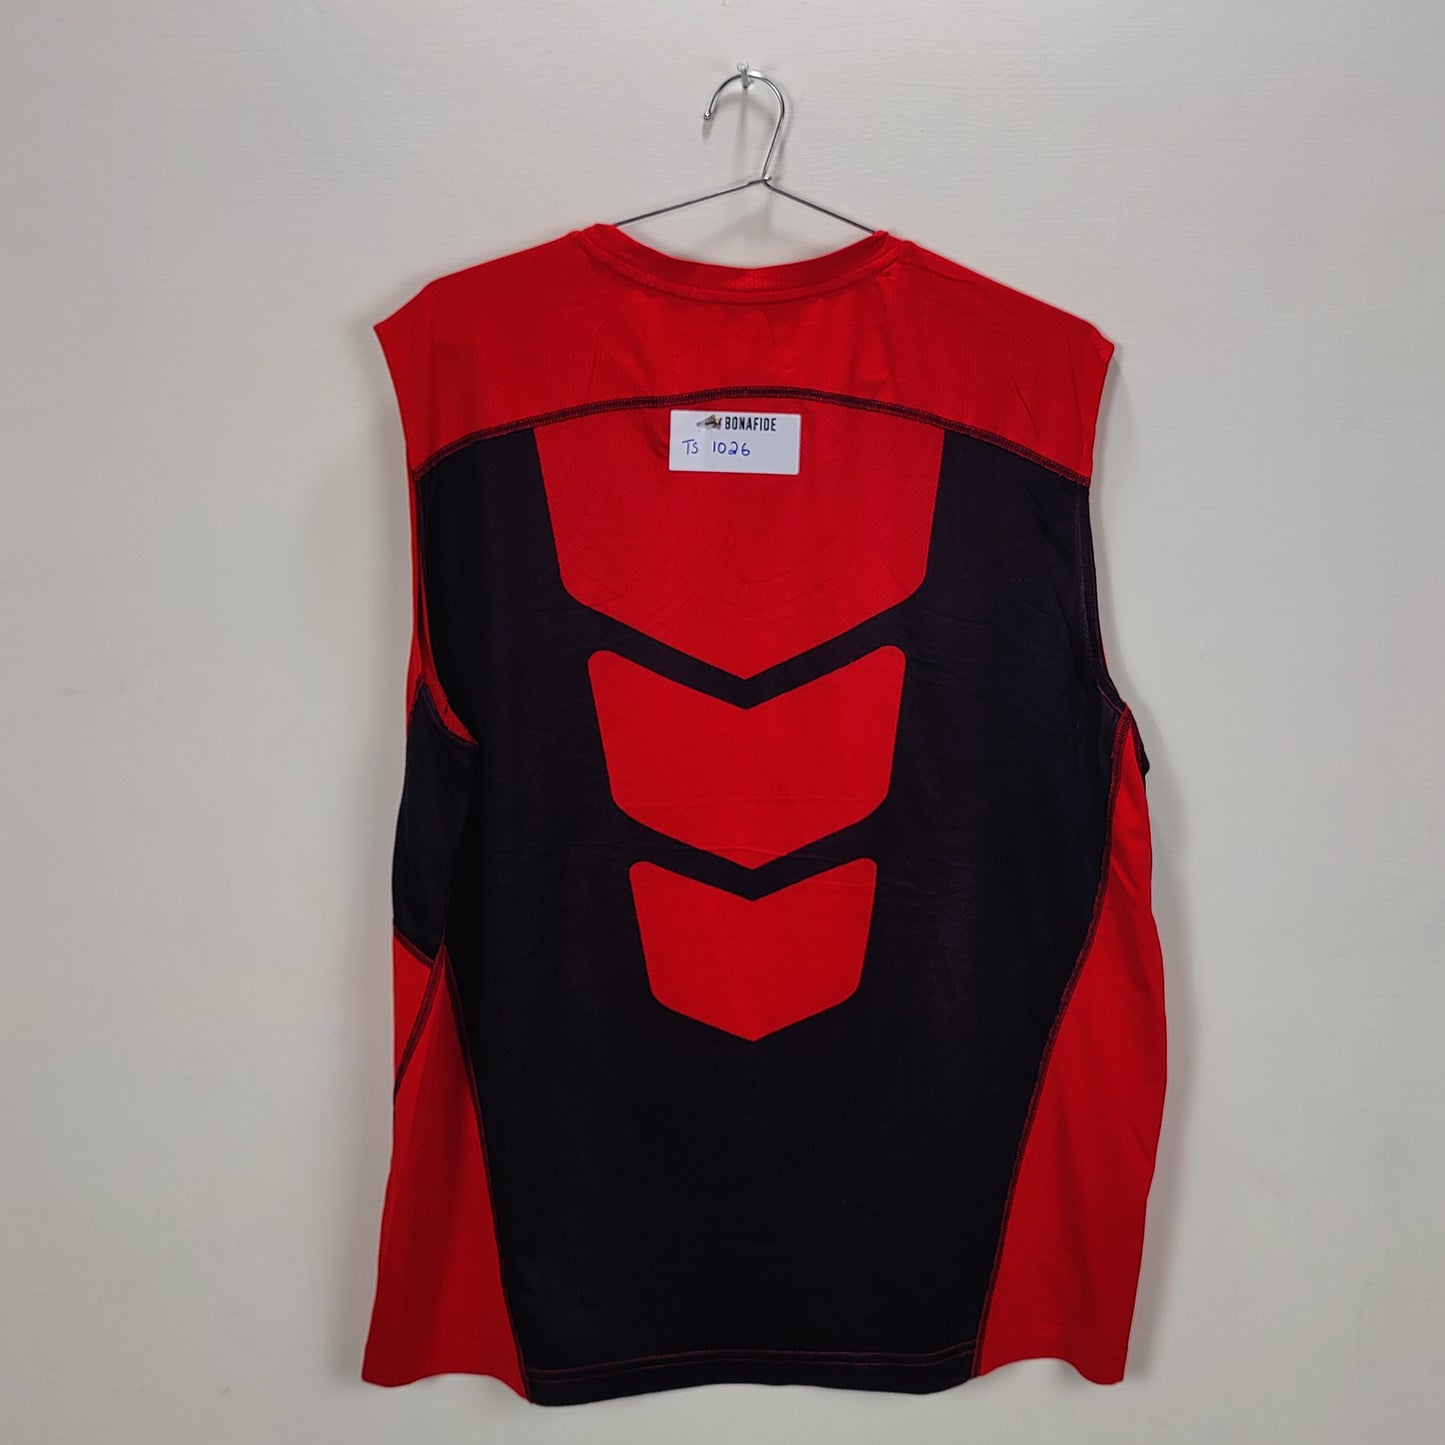 FILA Muscle Shirt - Red - TS1026